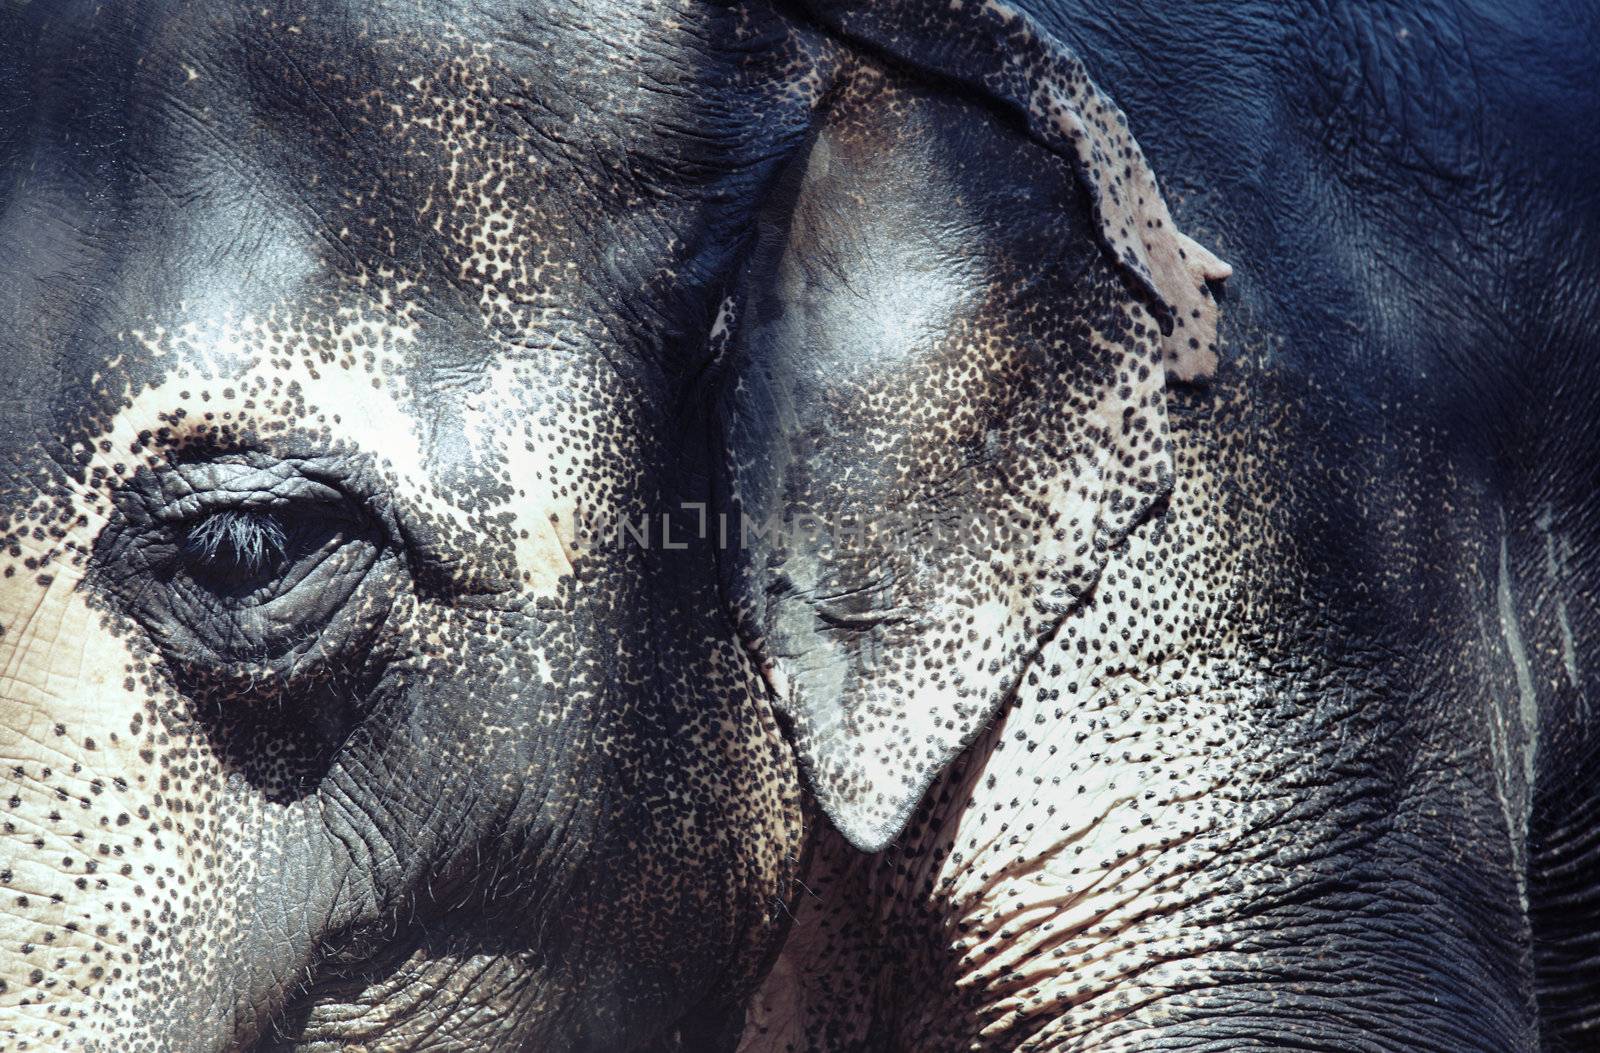 Elephant by Novic